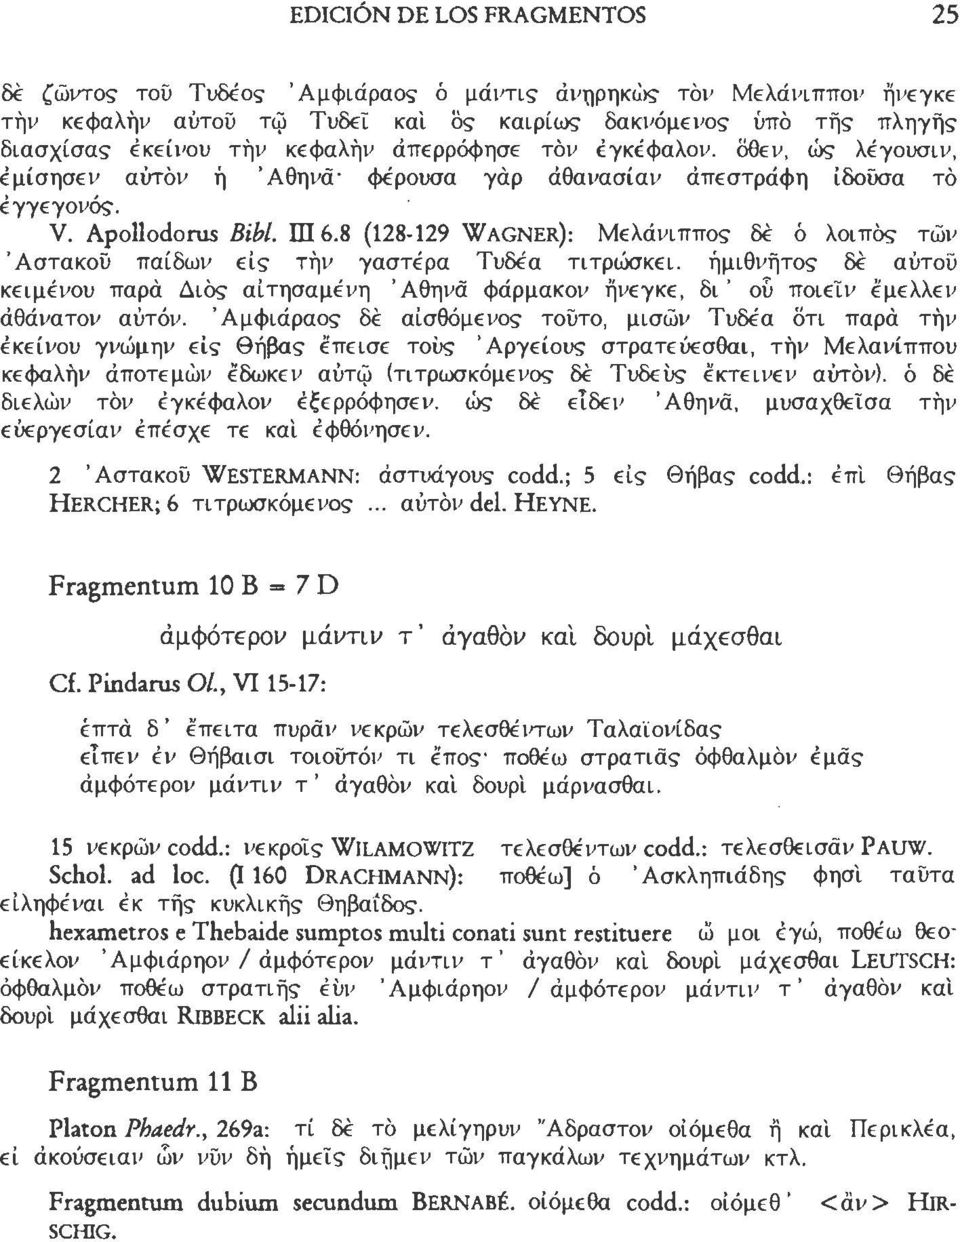 8 (128-129 WAGNER): Μελάνιππος δέ ό λοιπός τών 'Αστακοϋ παίδων εις τήν γαστέρα Τυδέα τιτρώσκει.